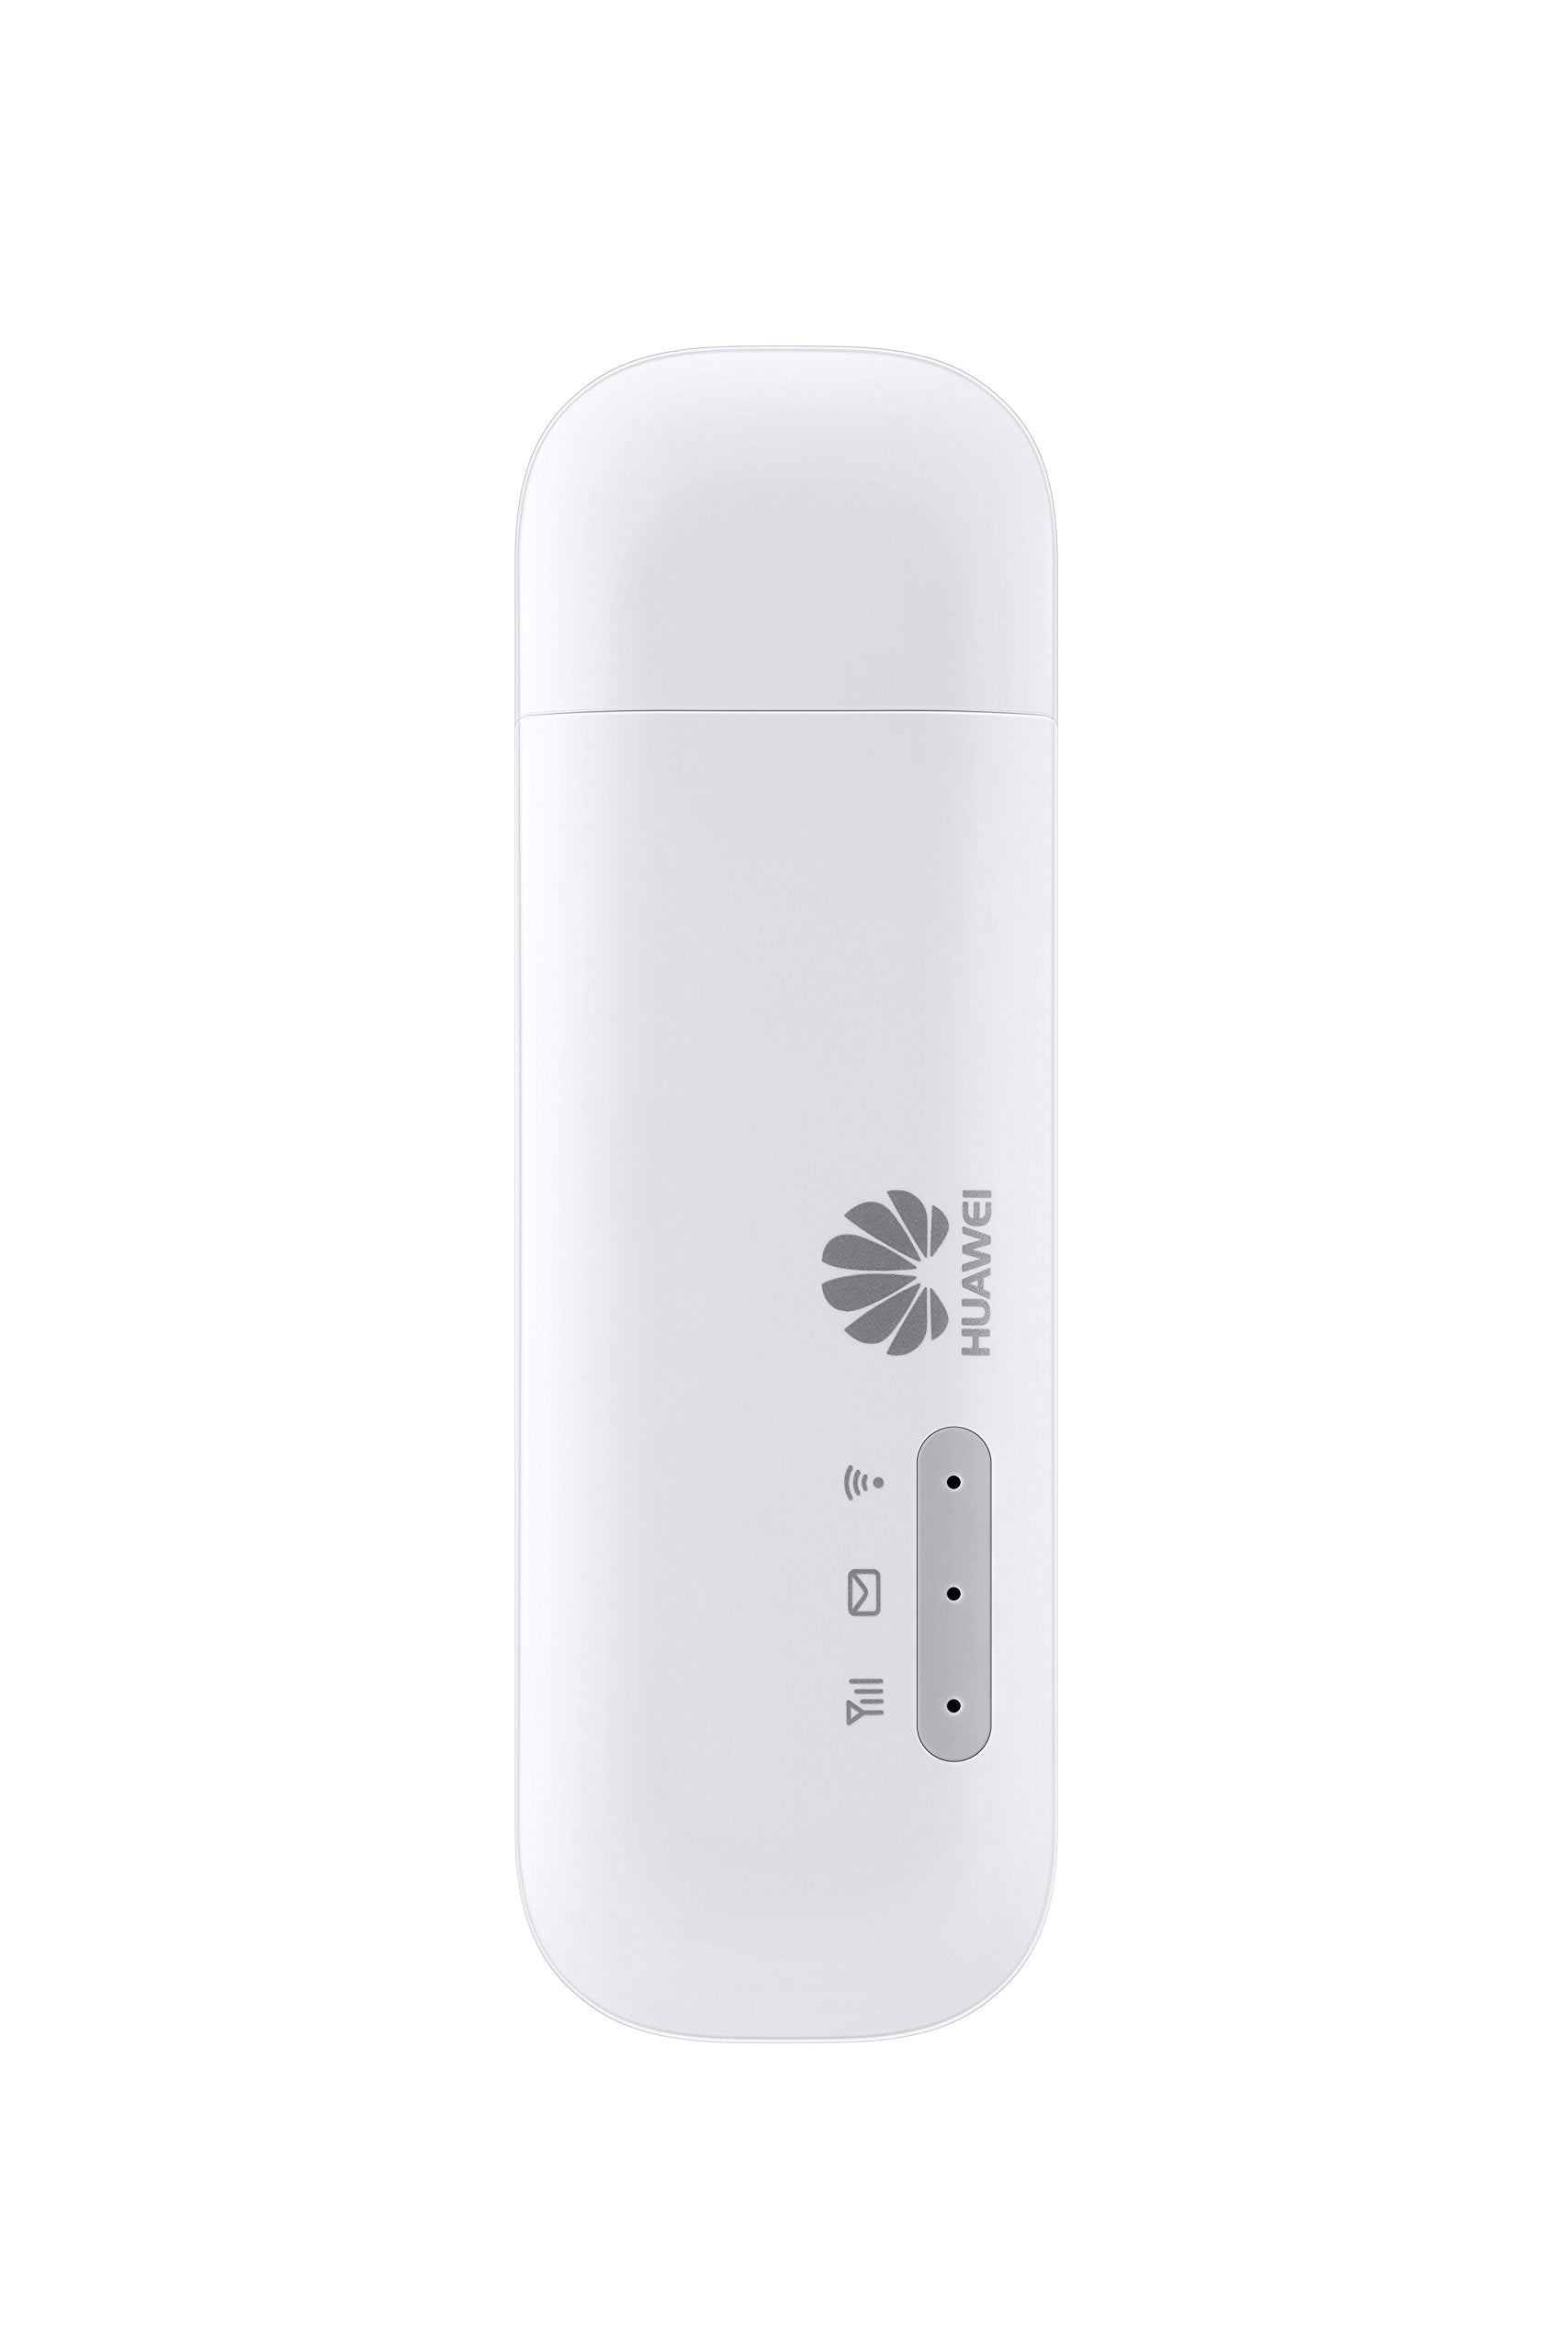 HUAWEI E8372 WiFi/WLAN LTE modem white